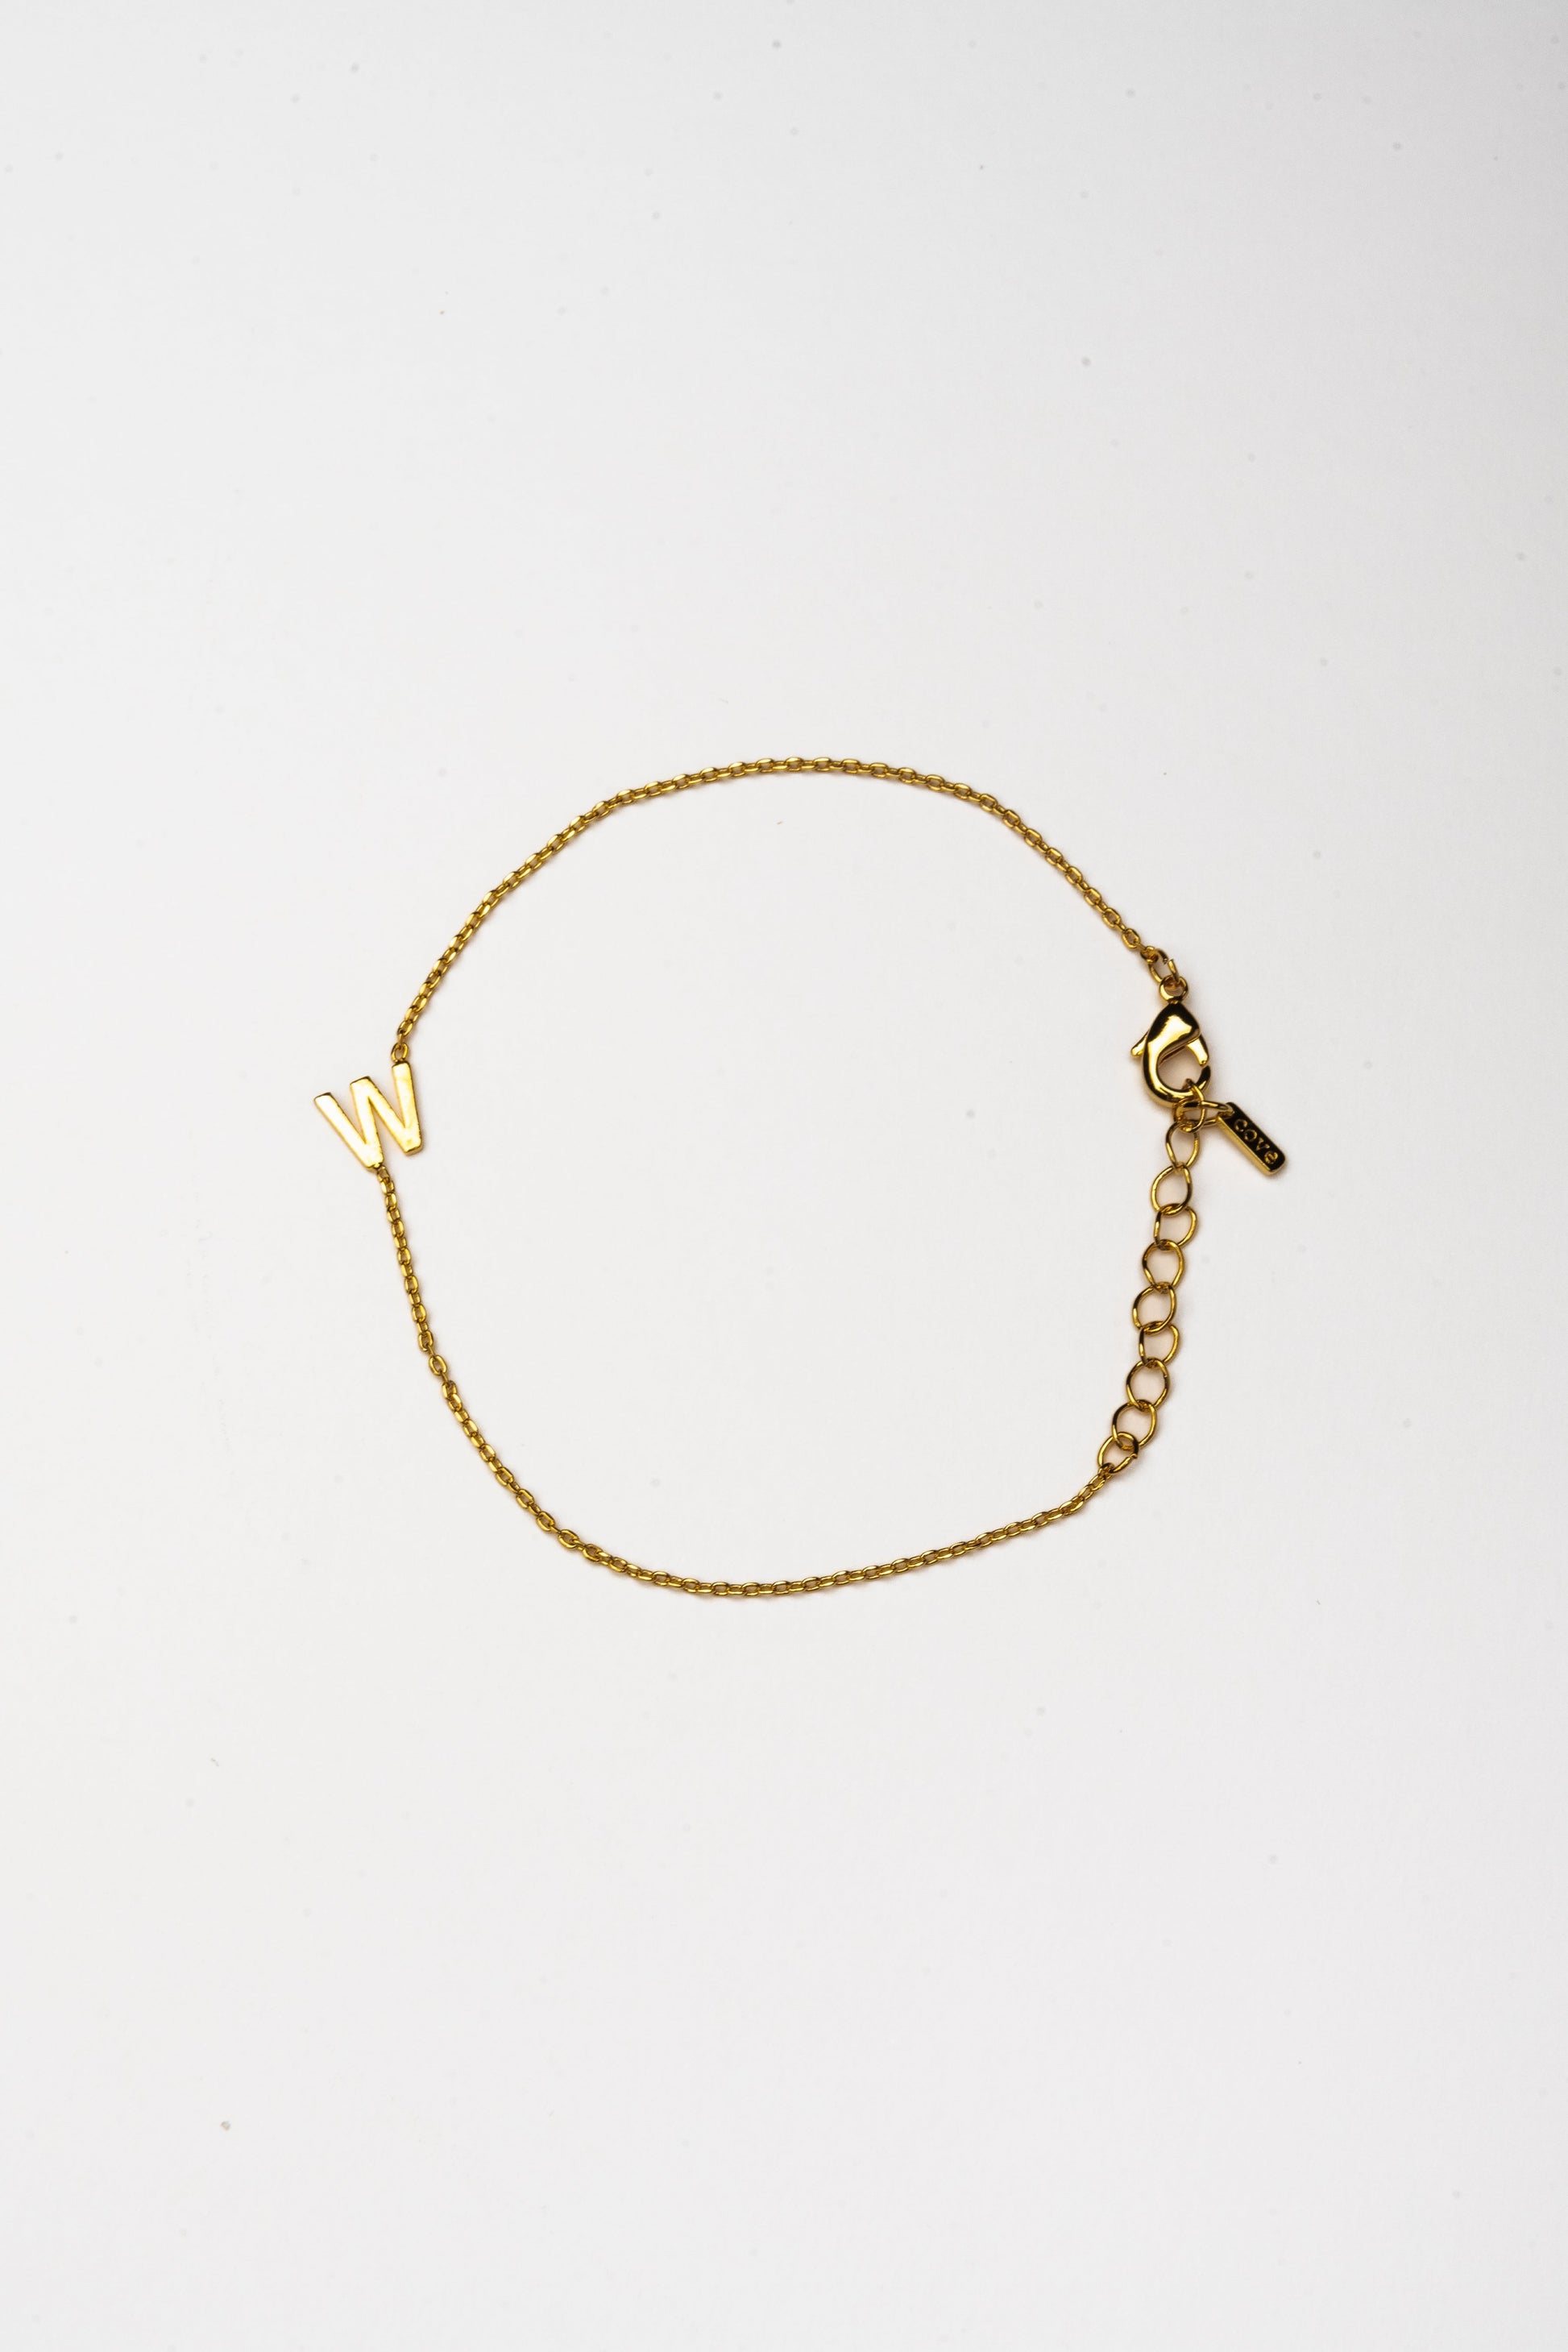 Cove Initial Bracelet WOMEN'S BRACELET Cove Accessories 18k Gold Plated 7" + 1" extender W